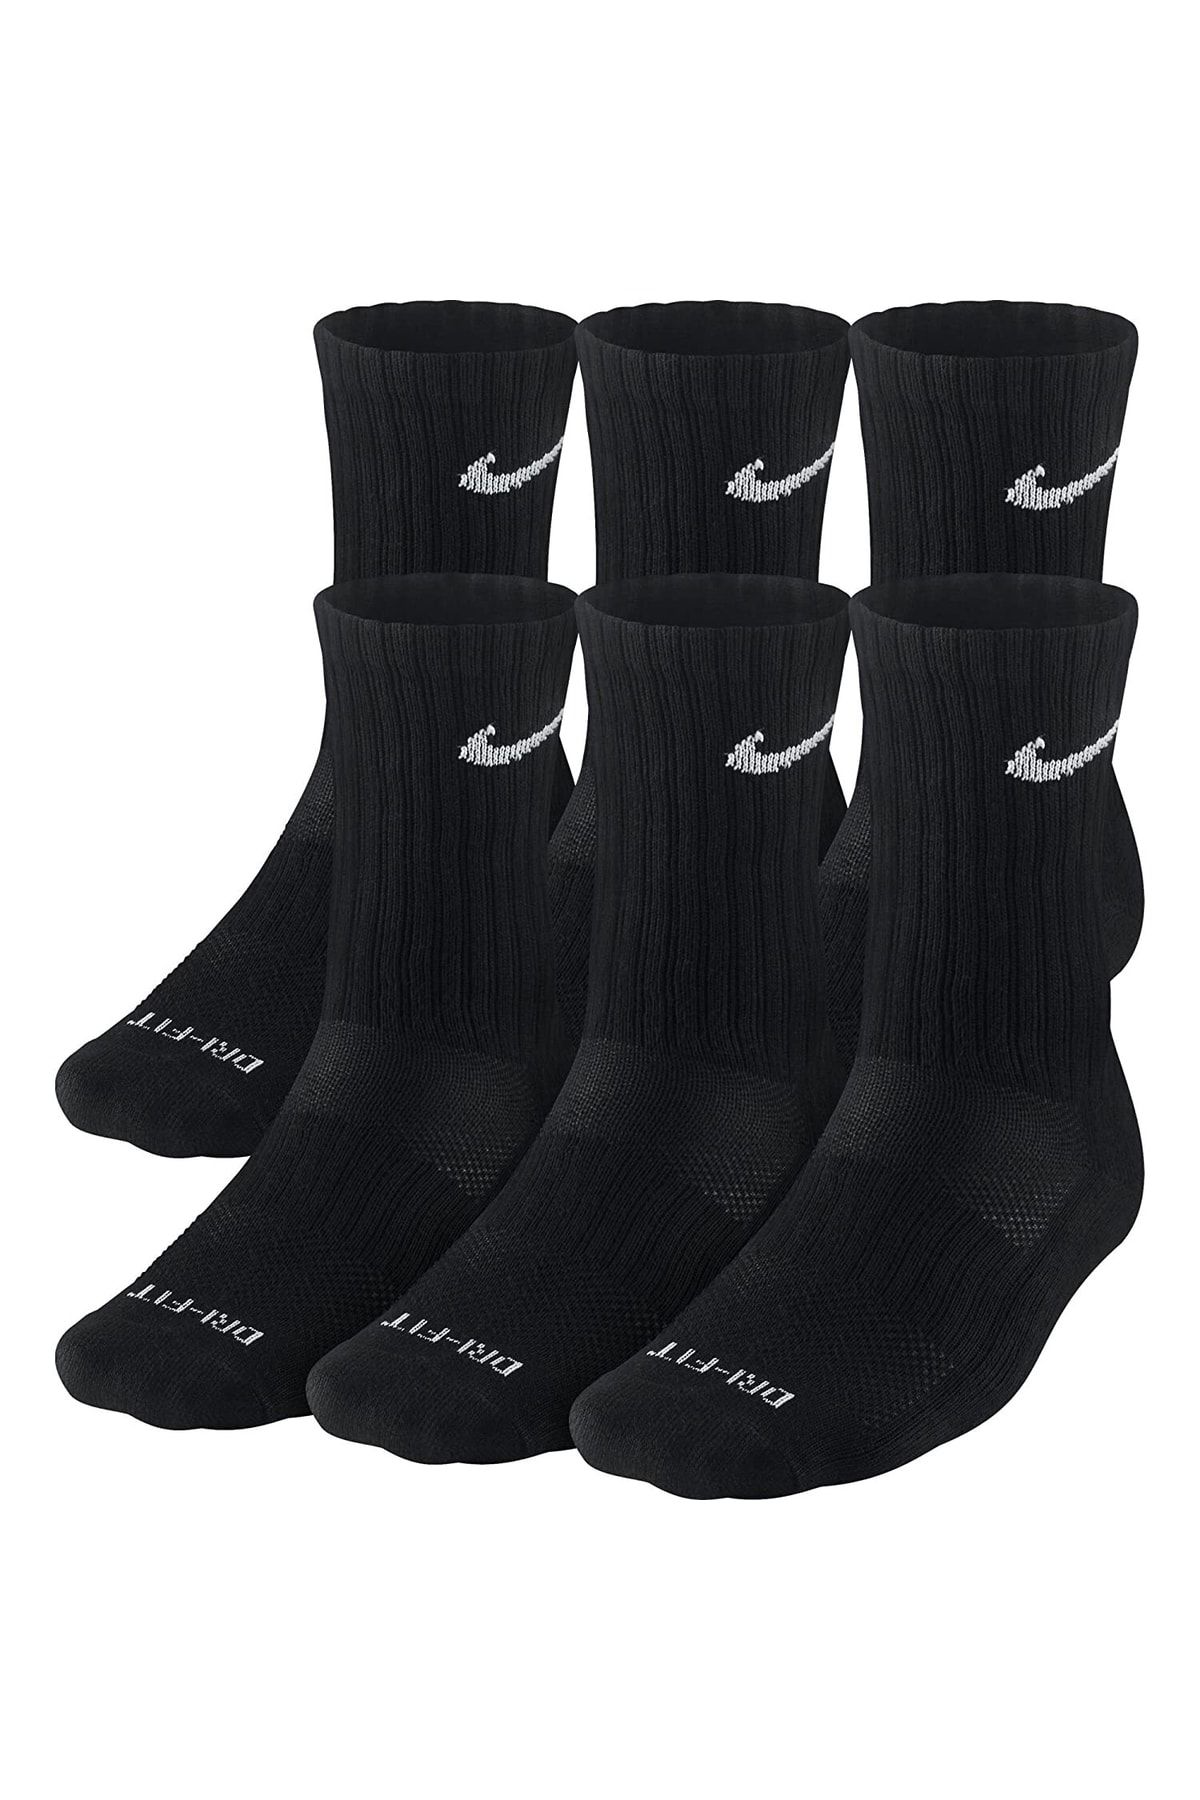 Nike Dri-fit Cushioned Crew Orta Boy Erkek Çorap Siyah/beyaz Sx4446